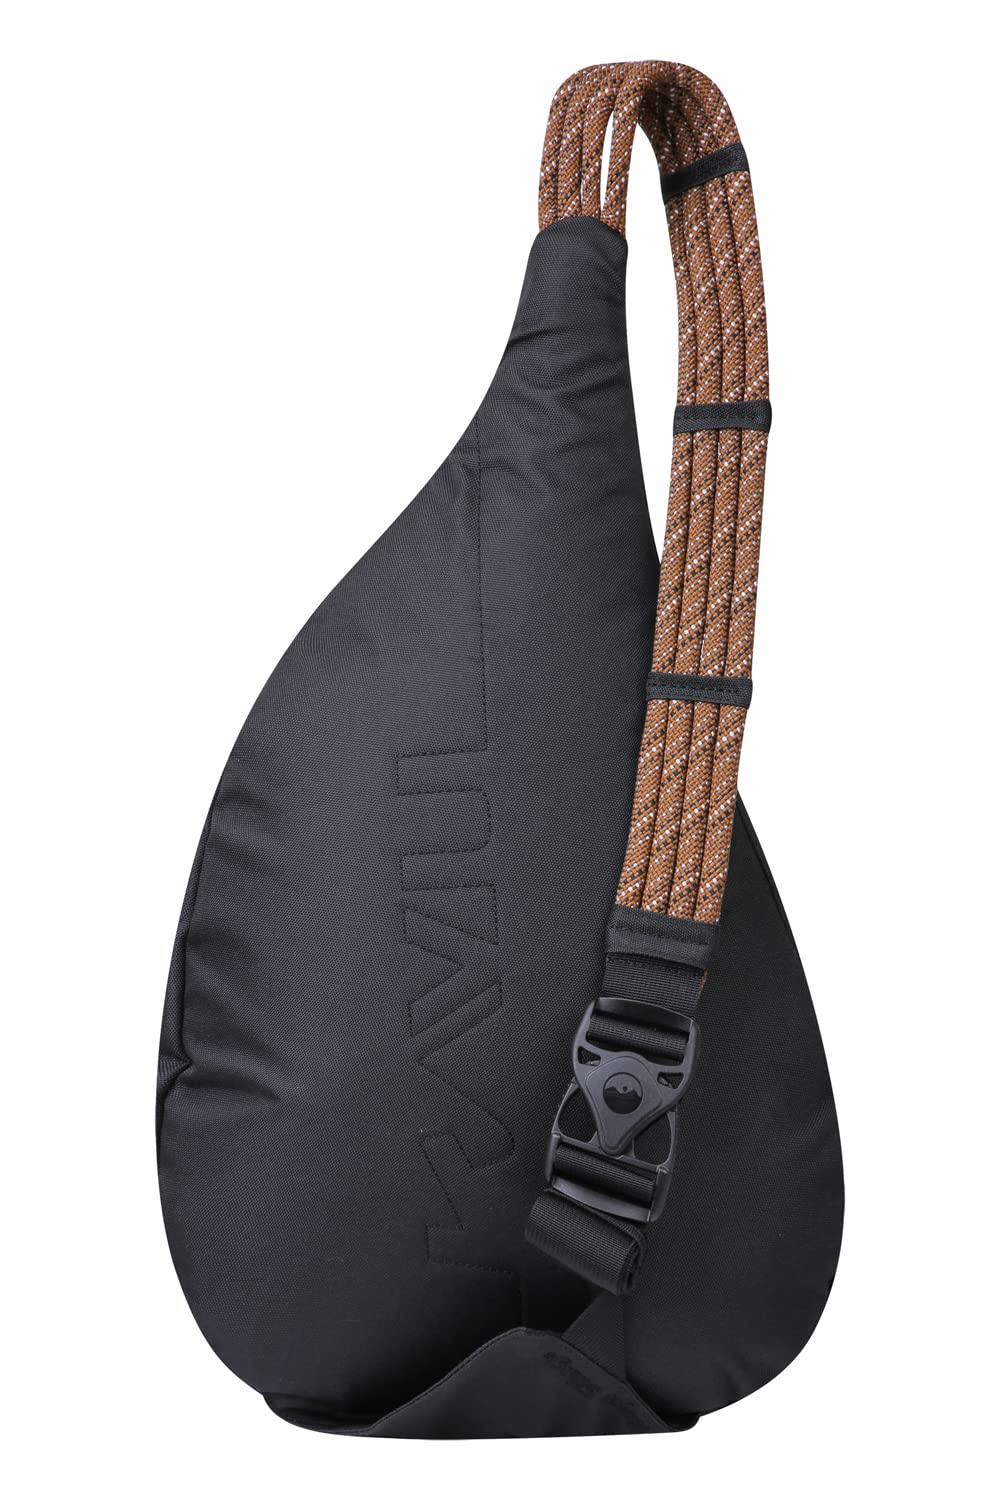 KAVU Ropette Water Resistant Crossbody Sling Bag